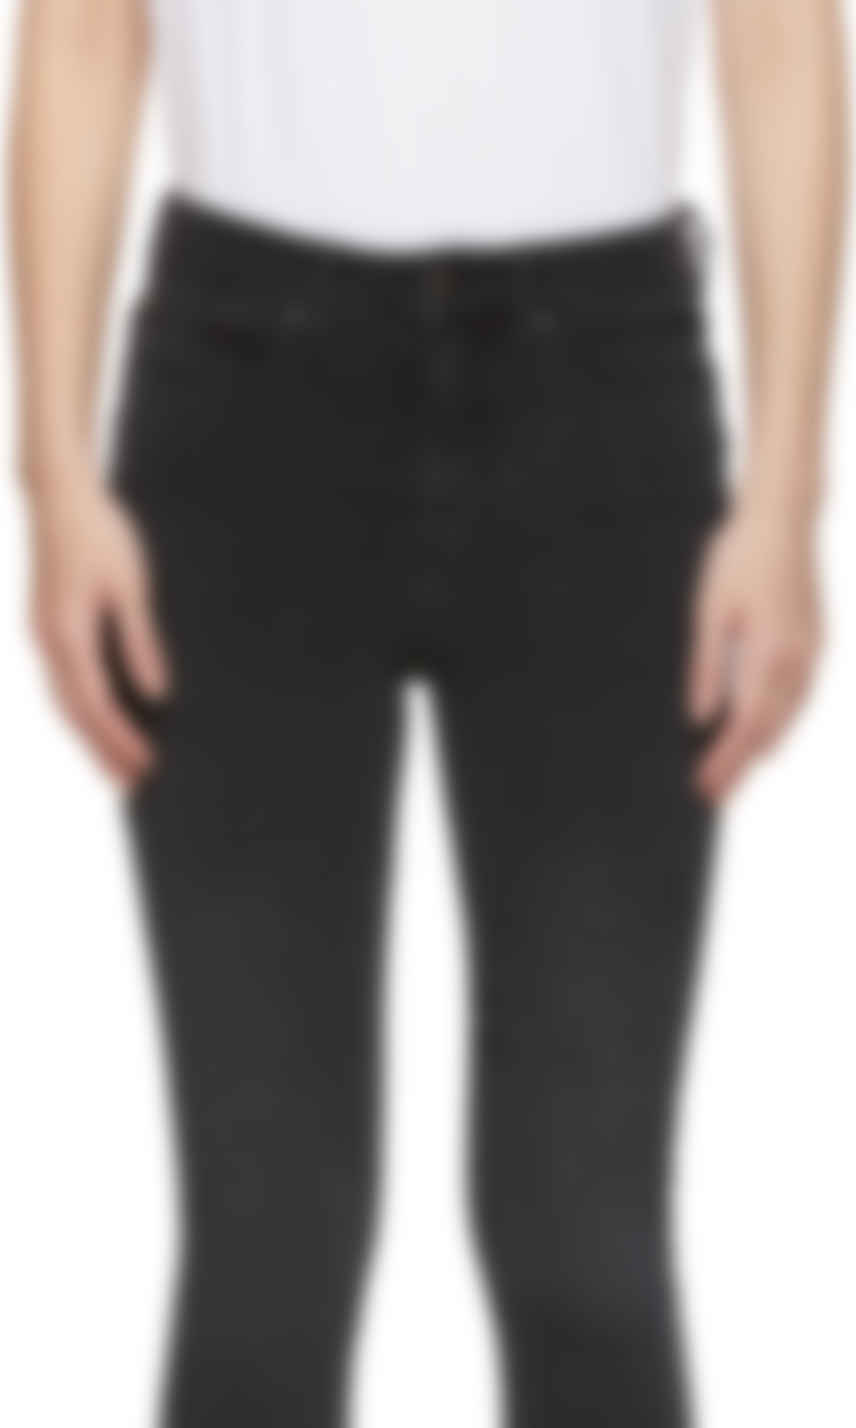 Black Powerhigh V Shape Jeans By Victoria Victoria Beckham On Sale